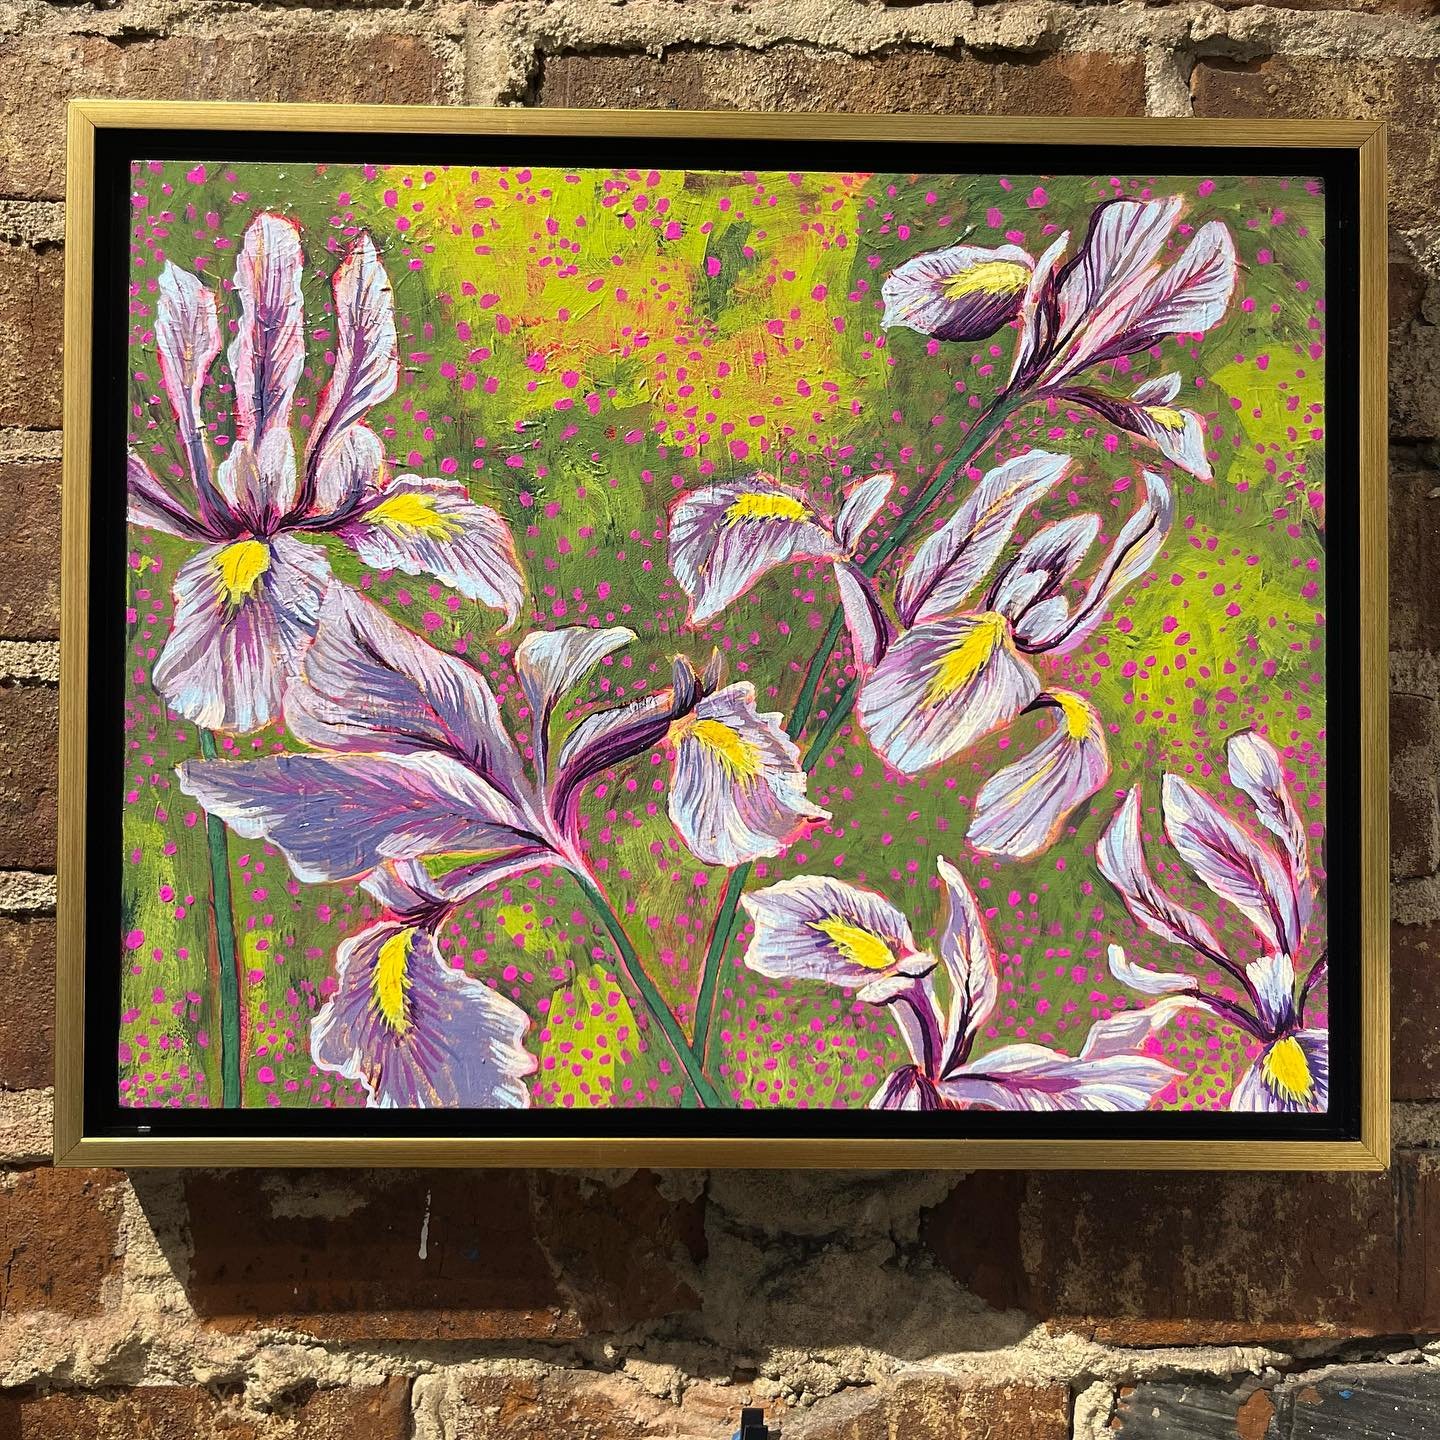 Lovely &quot;Lavender Louisiana Irises&quot; by Linda Moss 🌸 Acrylic on wood panel &bull; 11 x 14 inches &bull; framed to 12 5/8 x 15 5/8 &bull; $450

#louisianaartist #thatlacommunity #nolaart #nolaartgallery #neworleansart #louisianairis #artforsa